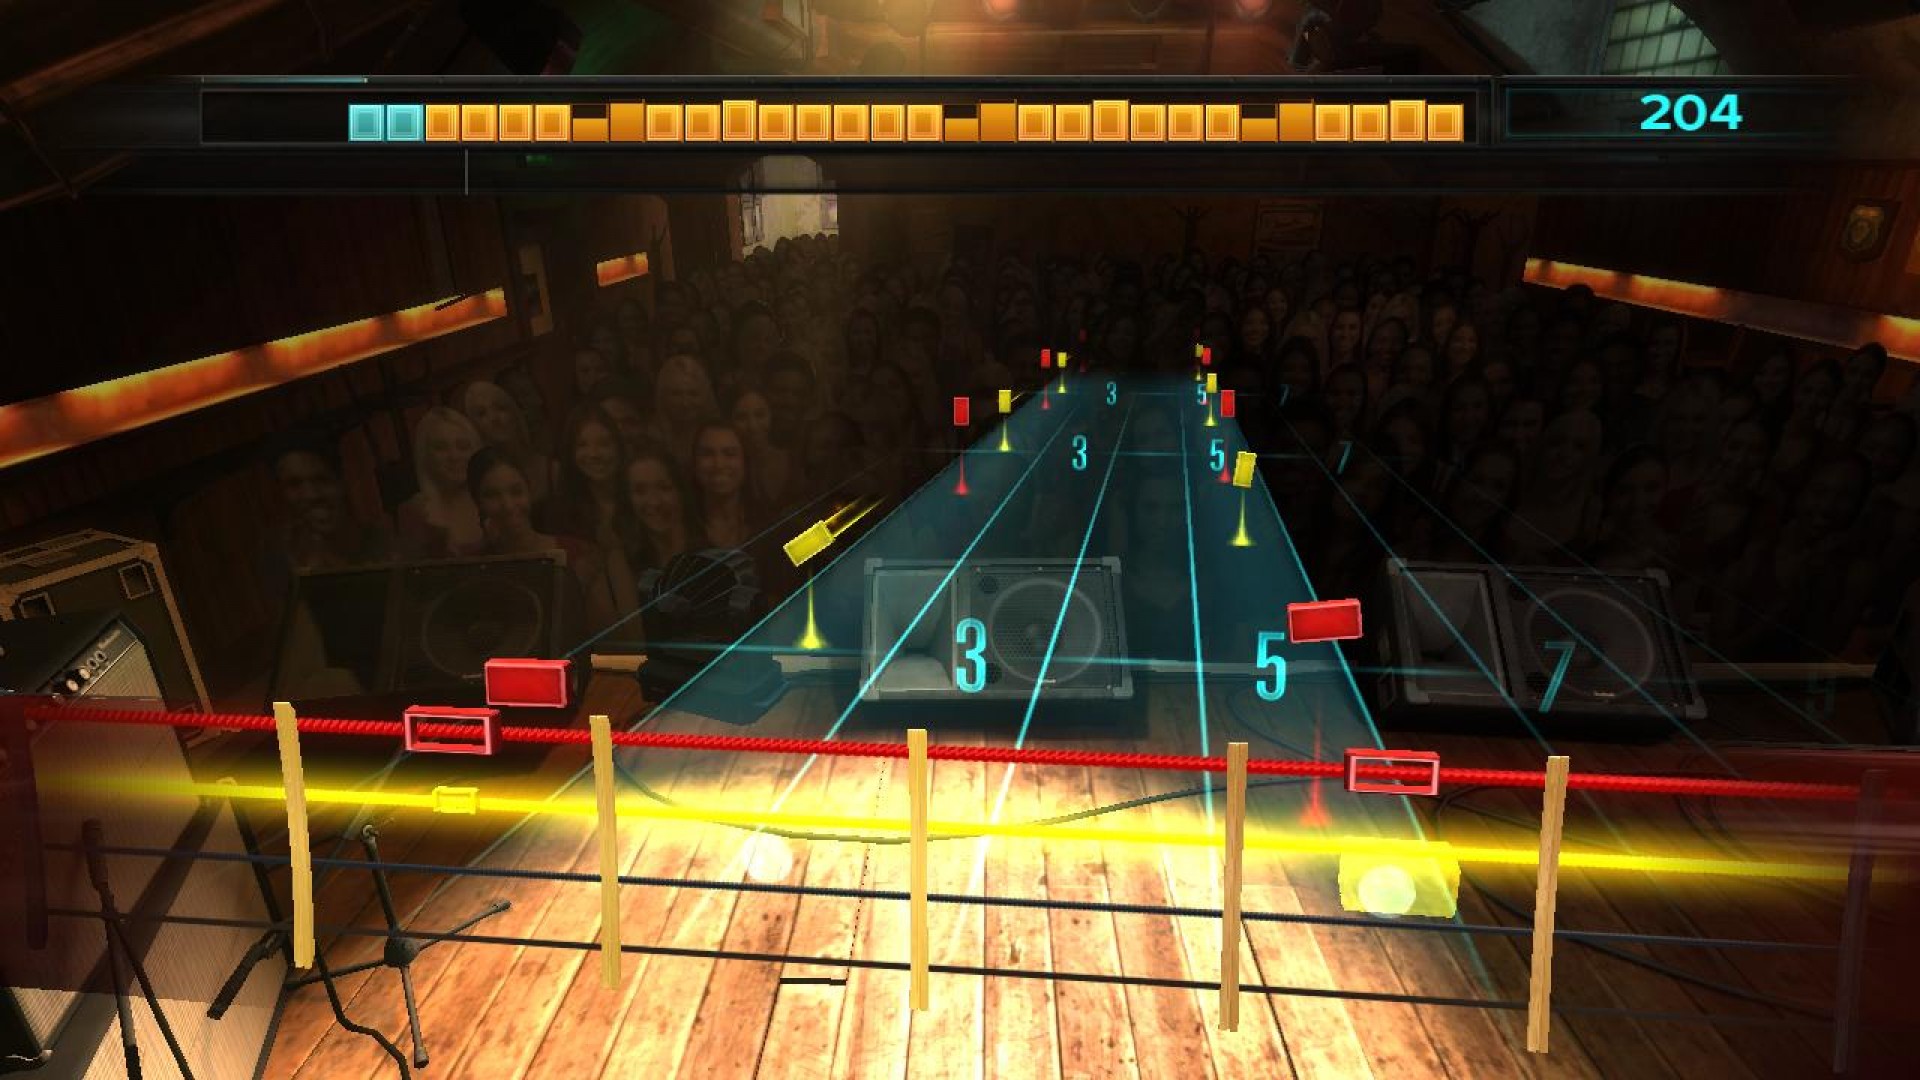 Rocksmith - The Offspring 3-Song Pack screenshot